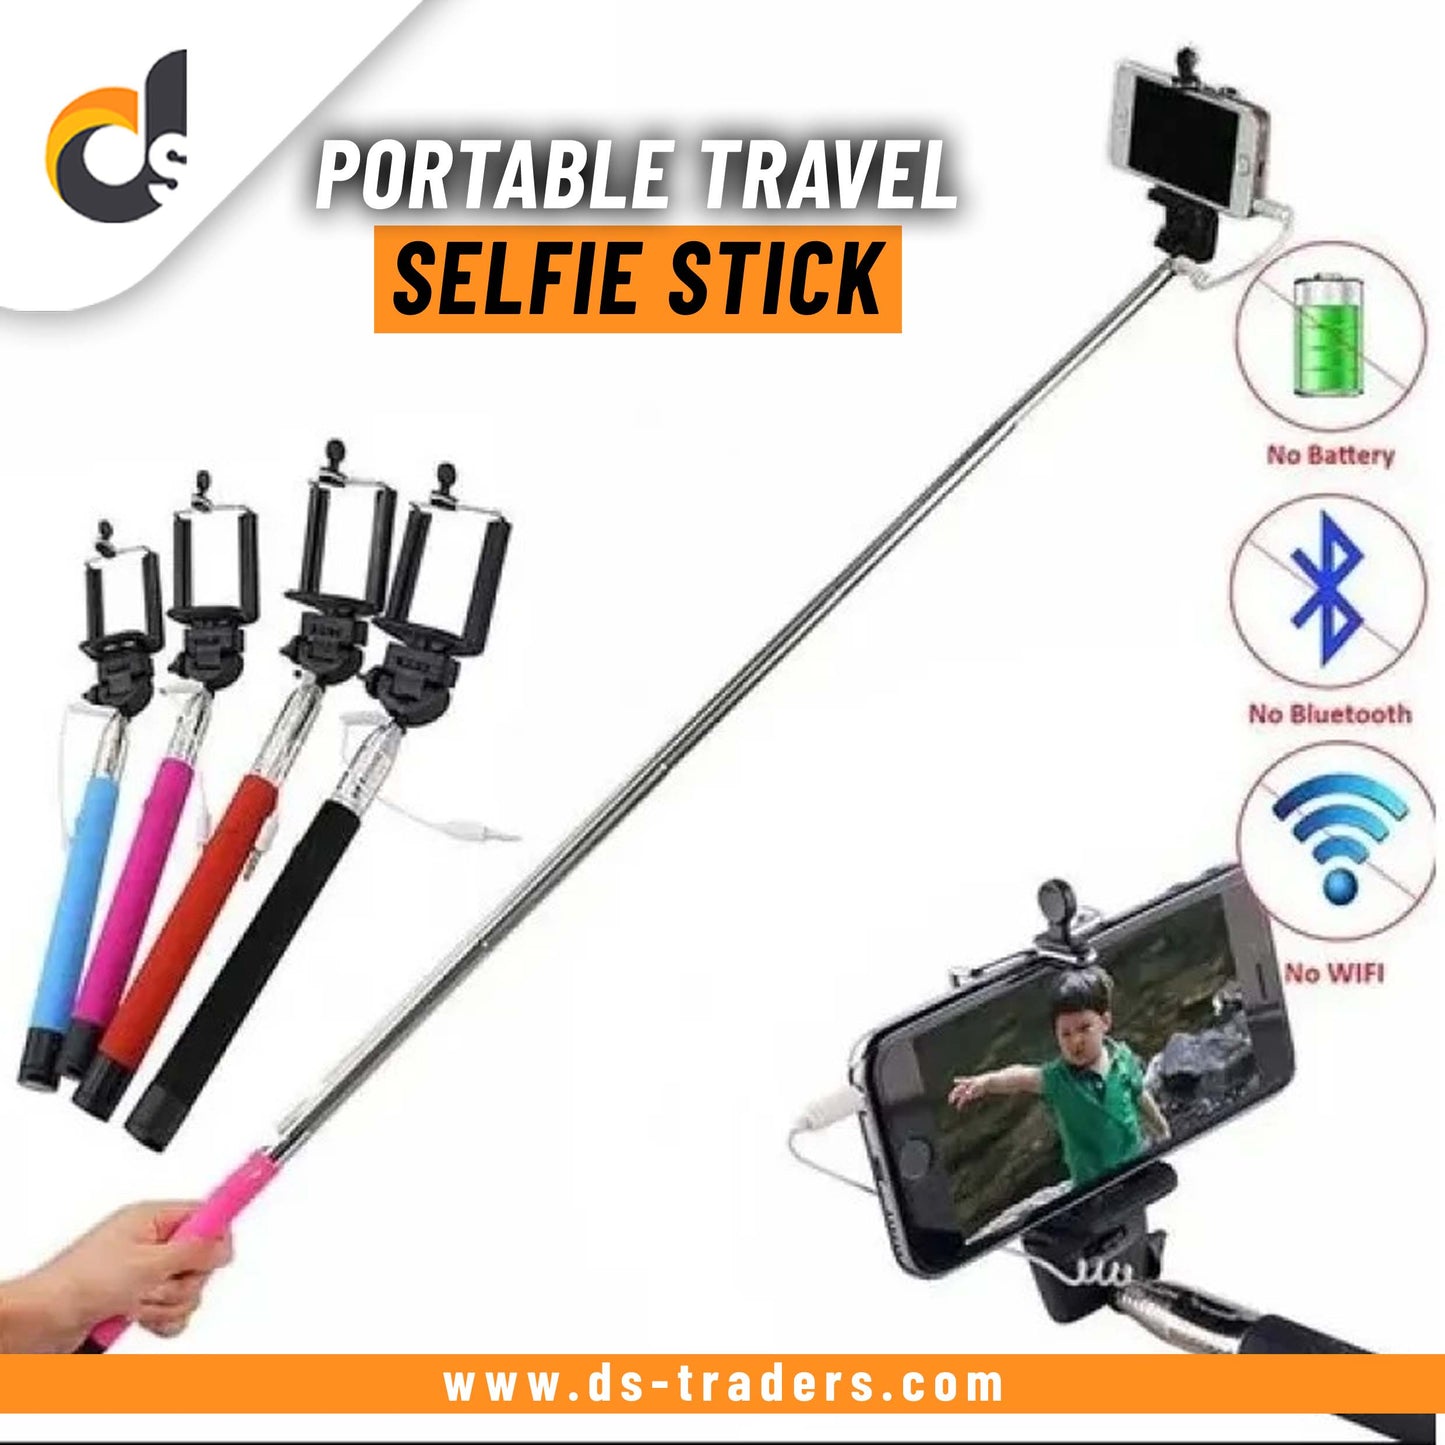 Portable Travel Selfie Stick